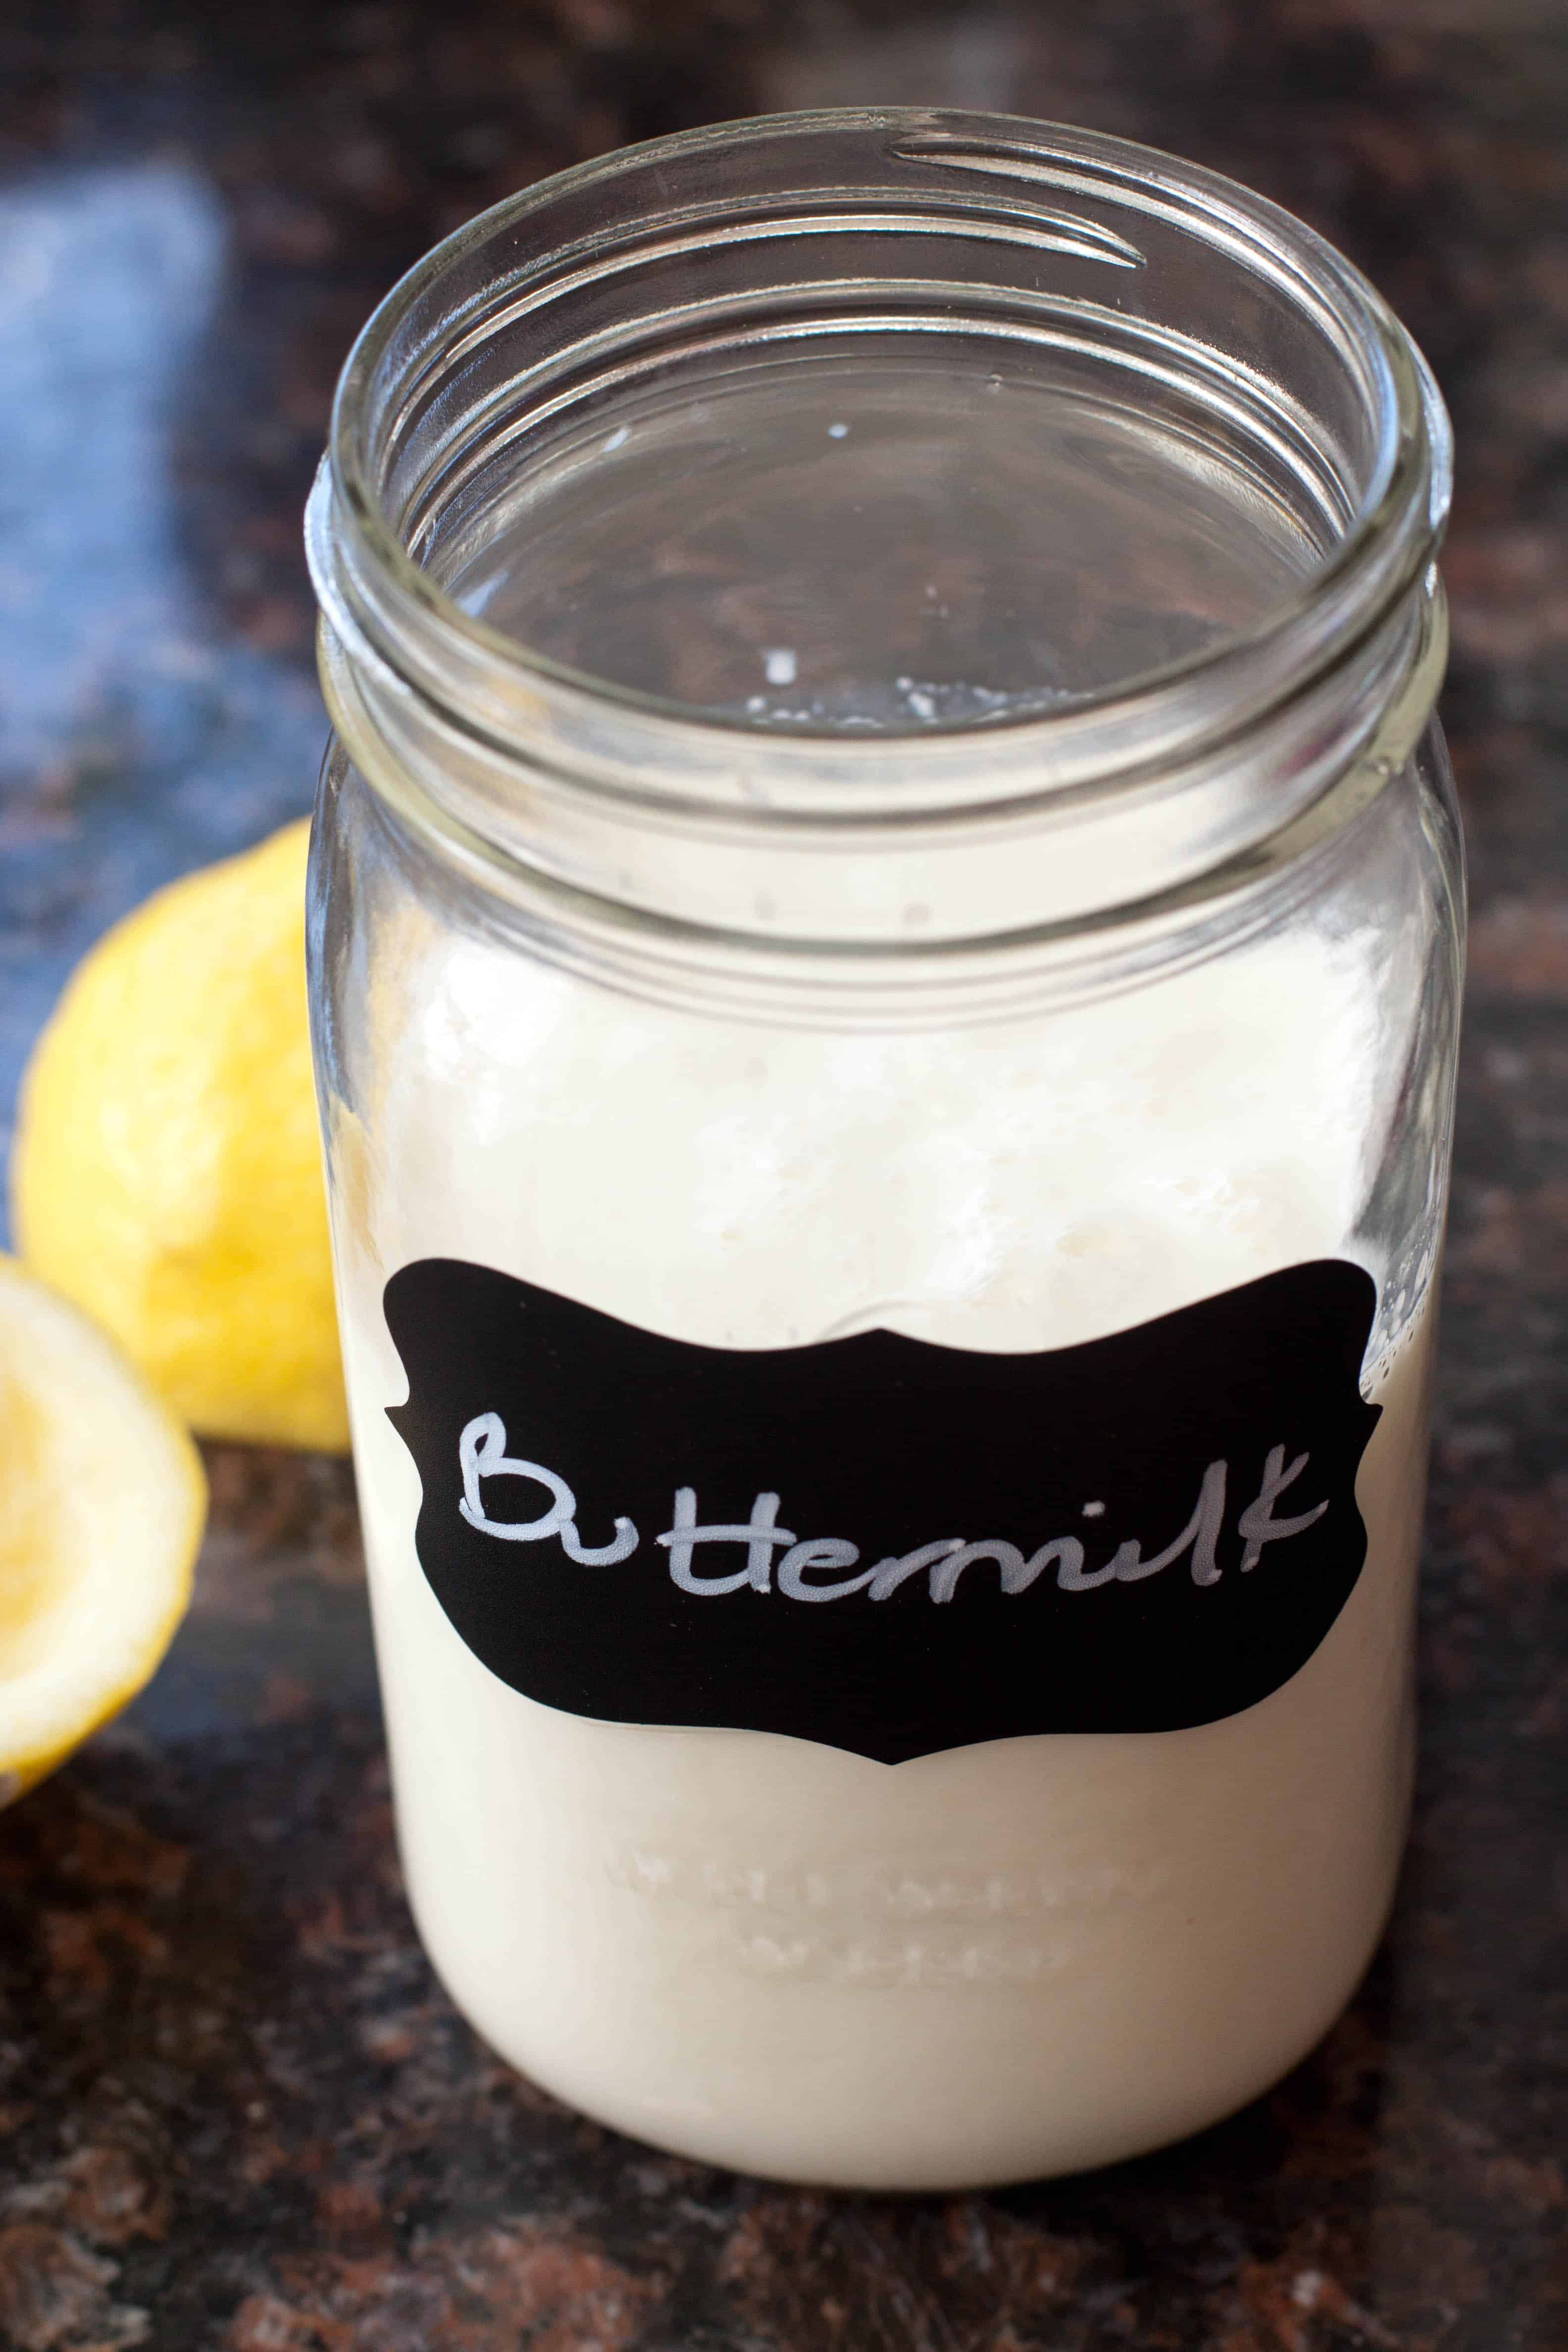 buttermilk